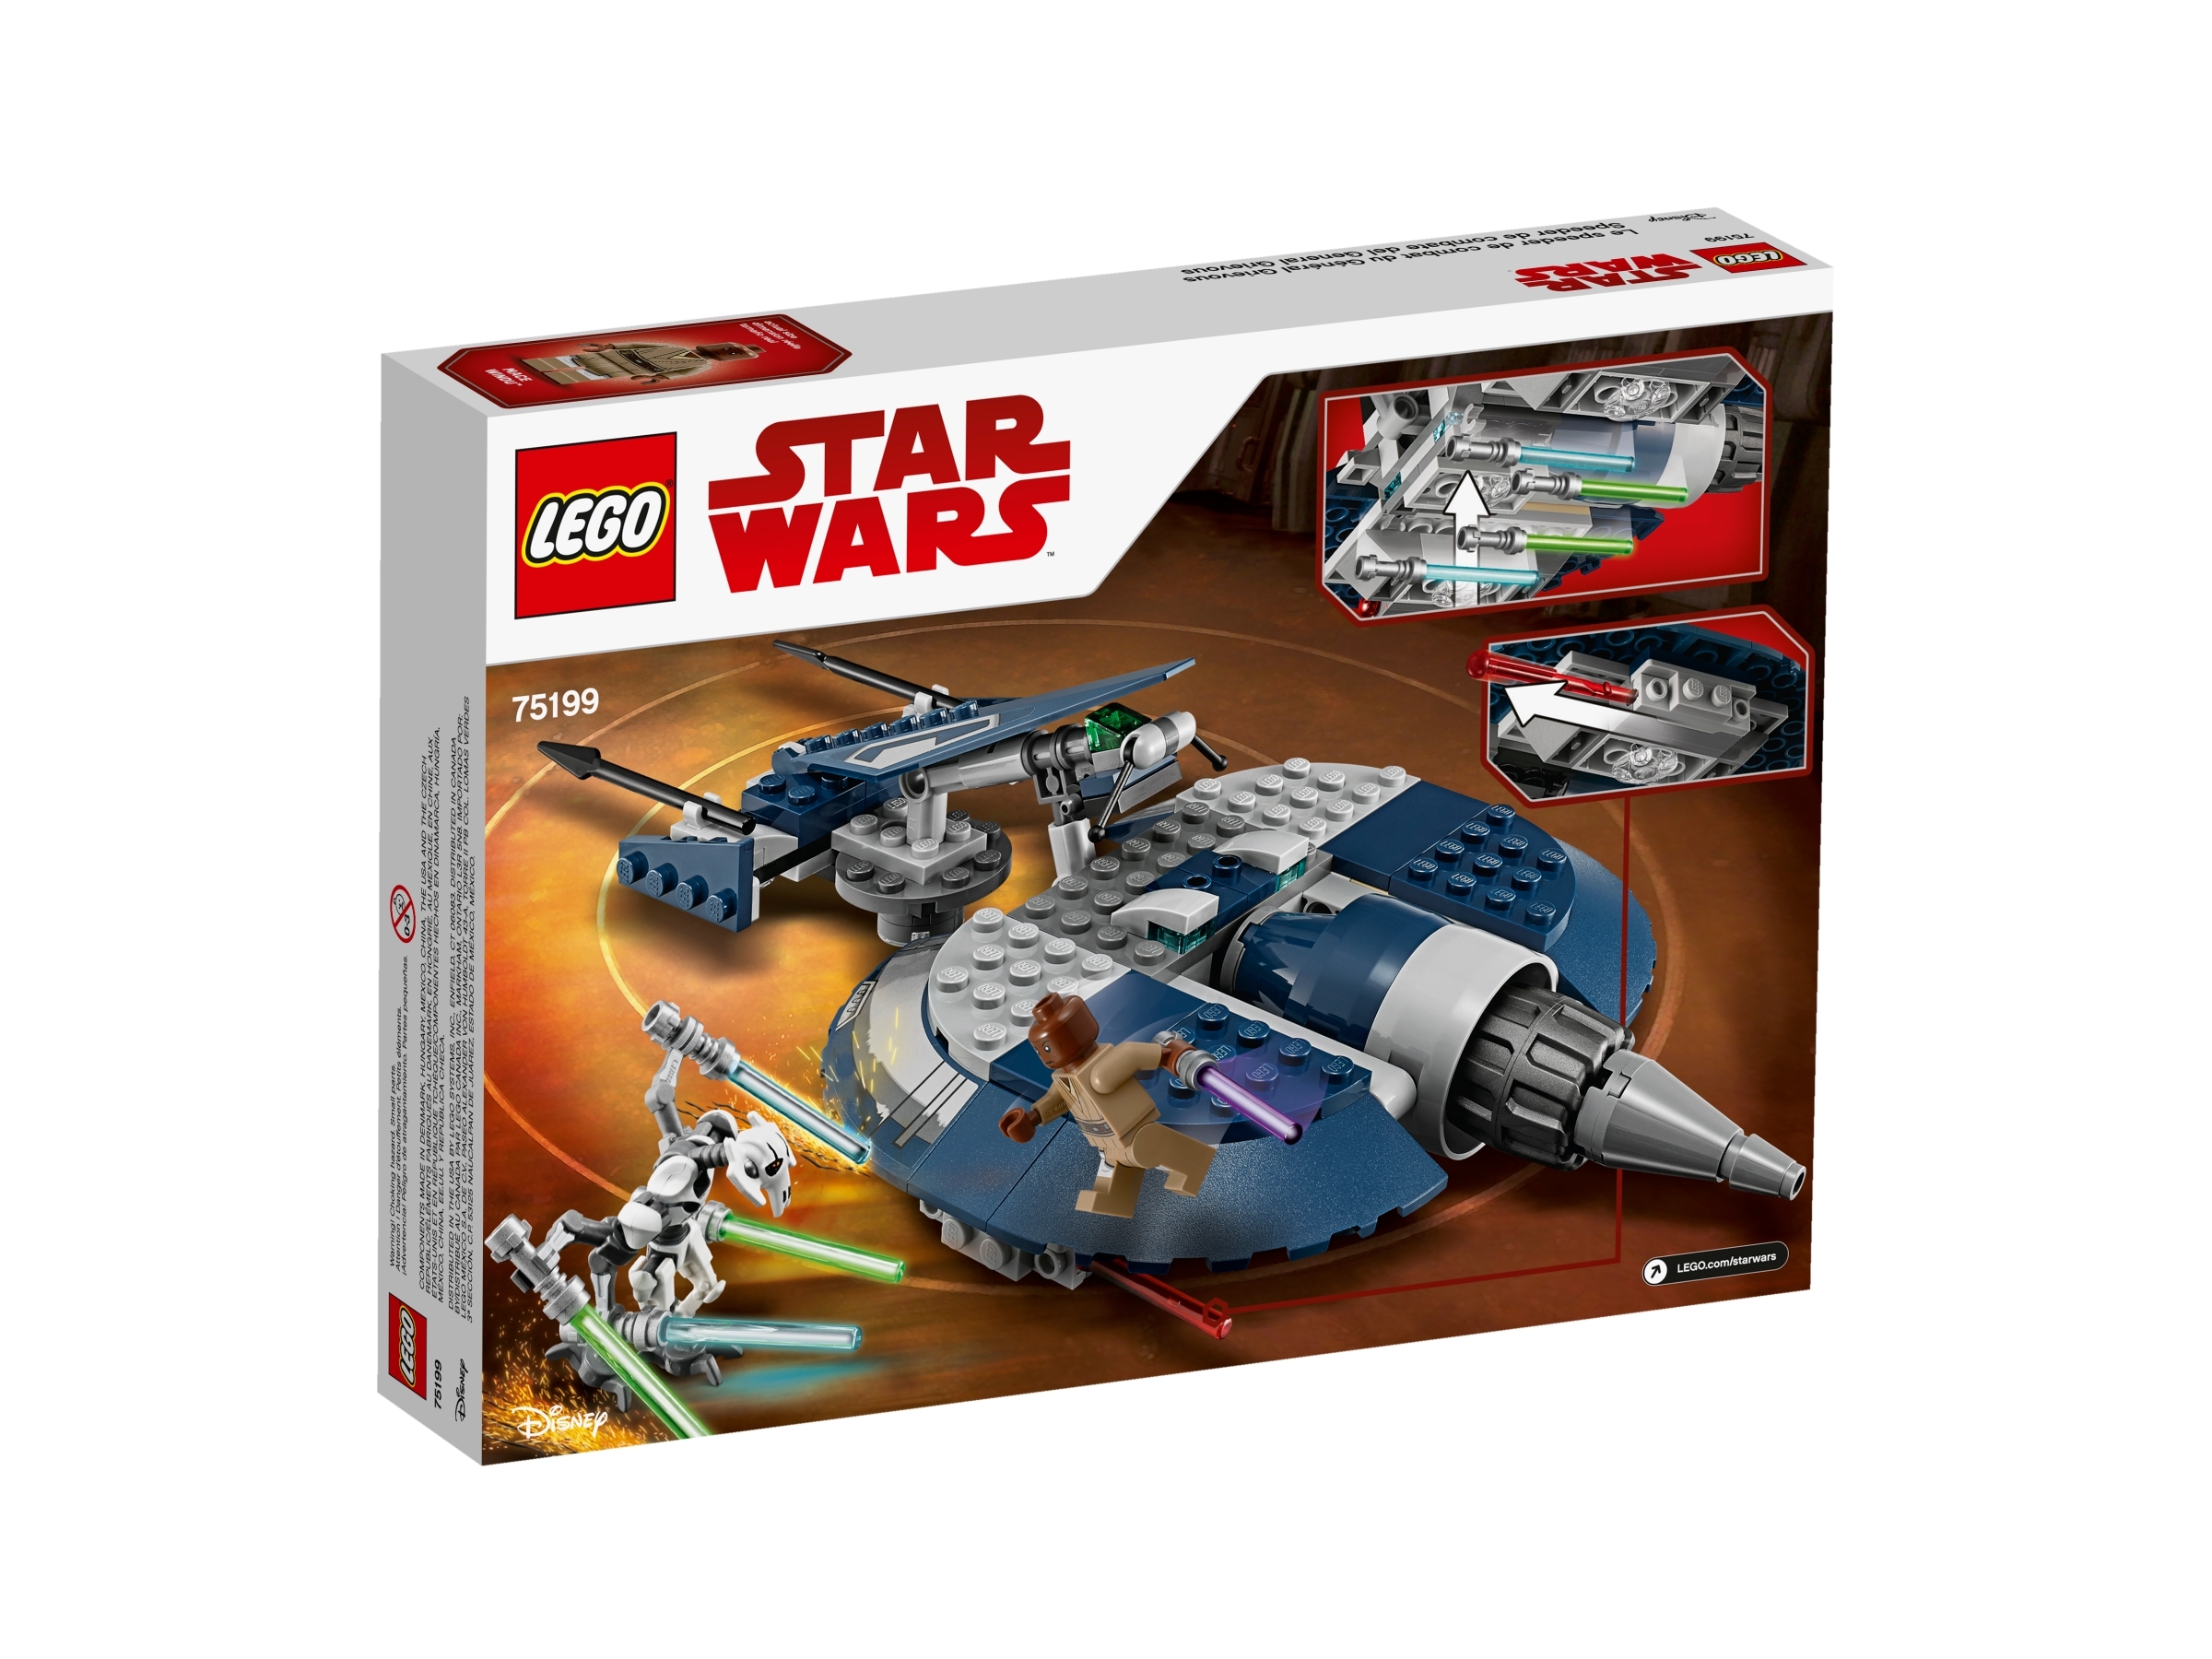 LEGO Star Wars 2018 General Grievous/' Combat Speeder for sale online 75199